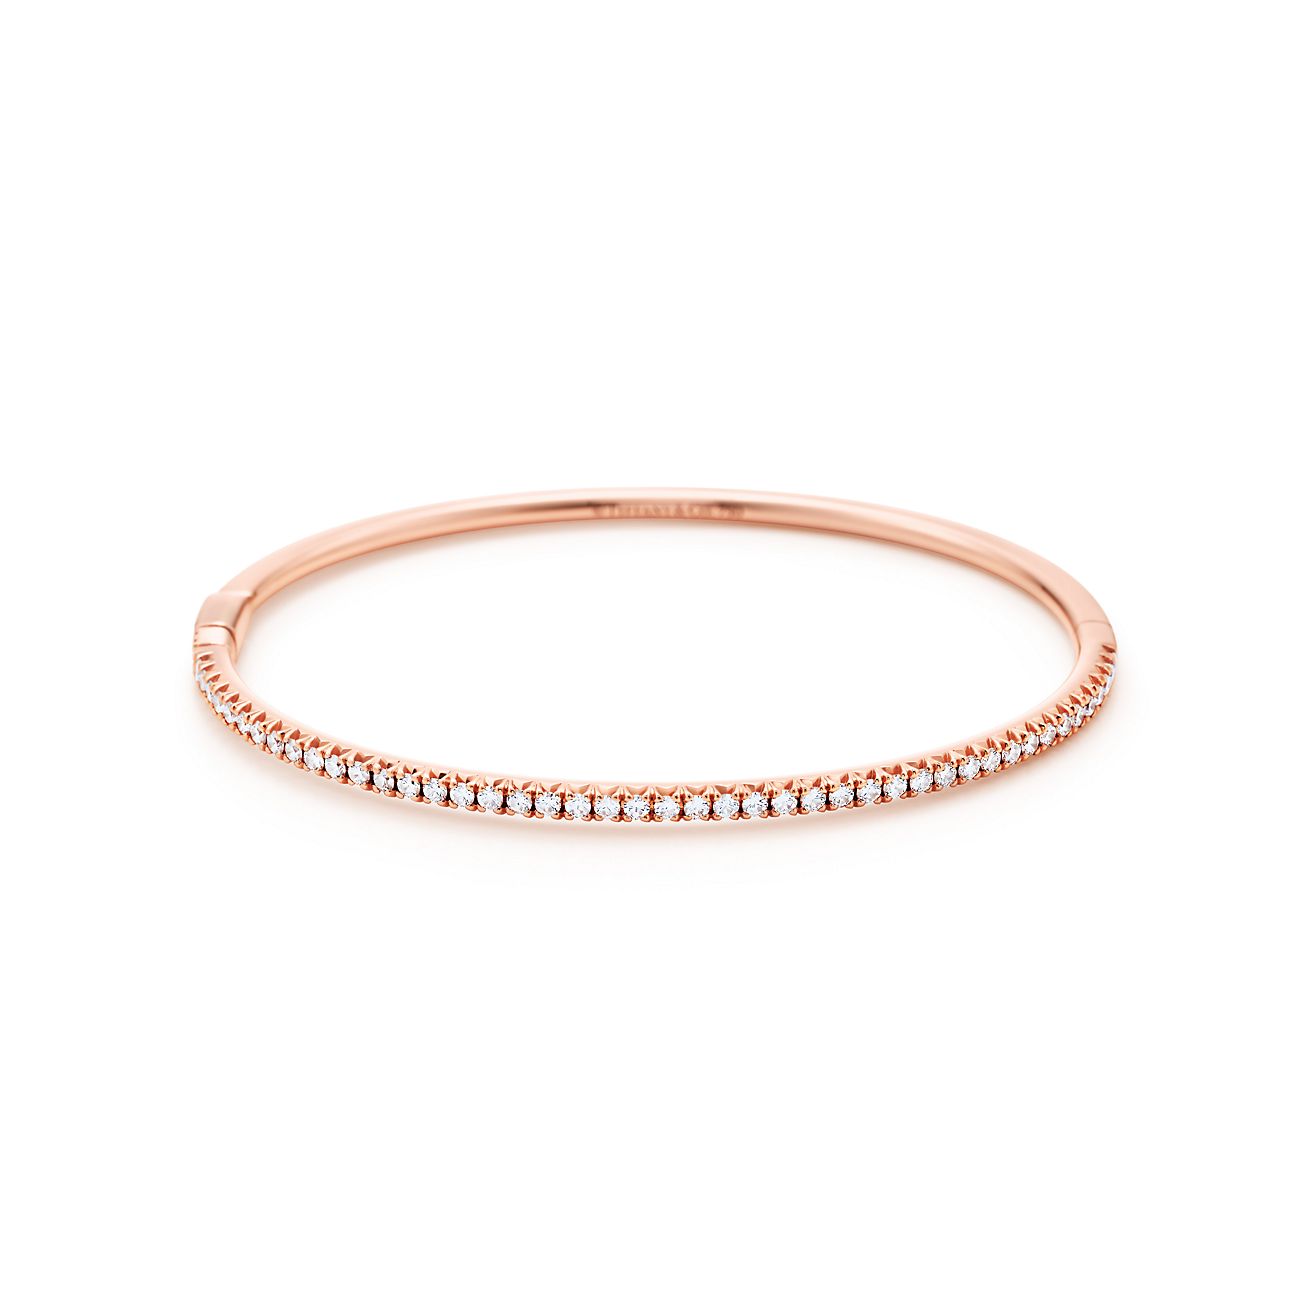 Tiffany Metro Hinged Bangle Bracelet in 18K Rose Gold with Diamonds, Medium